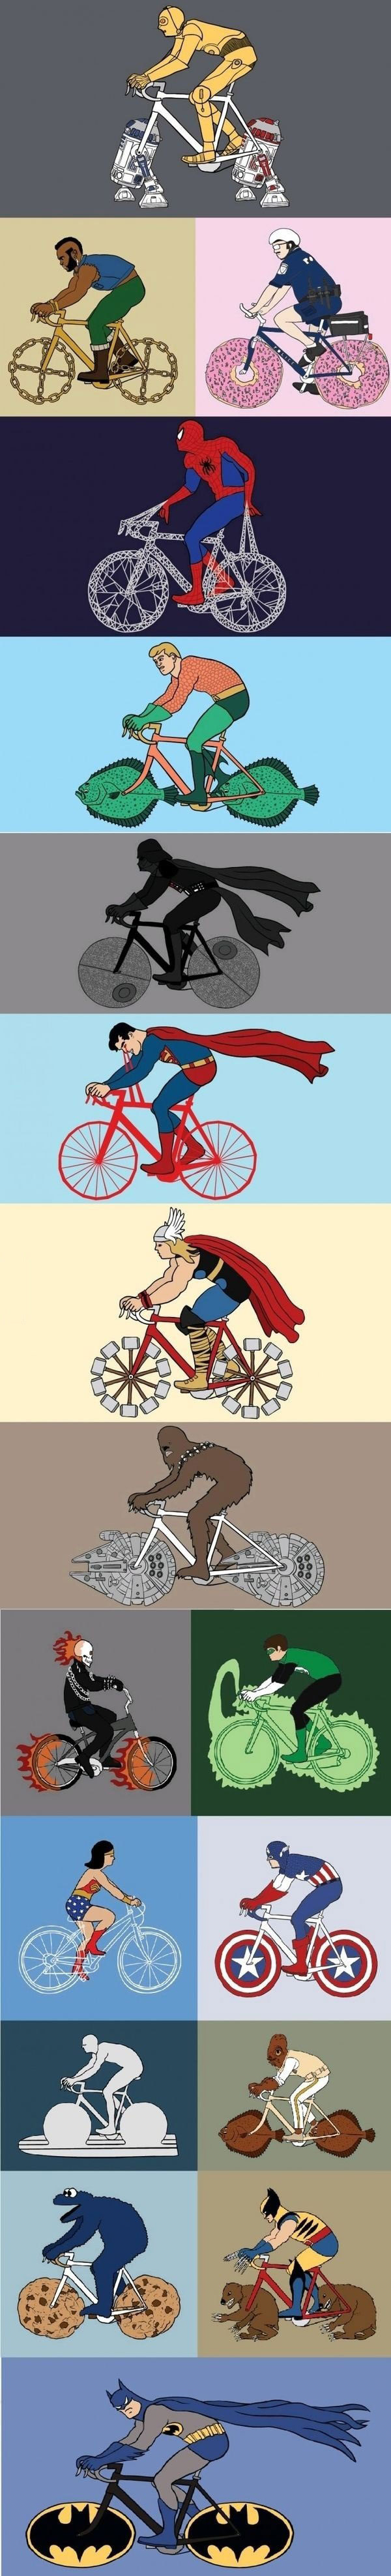 superhero bicycles, fan art